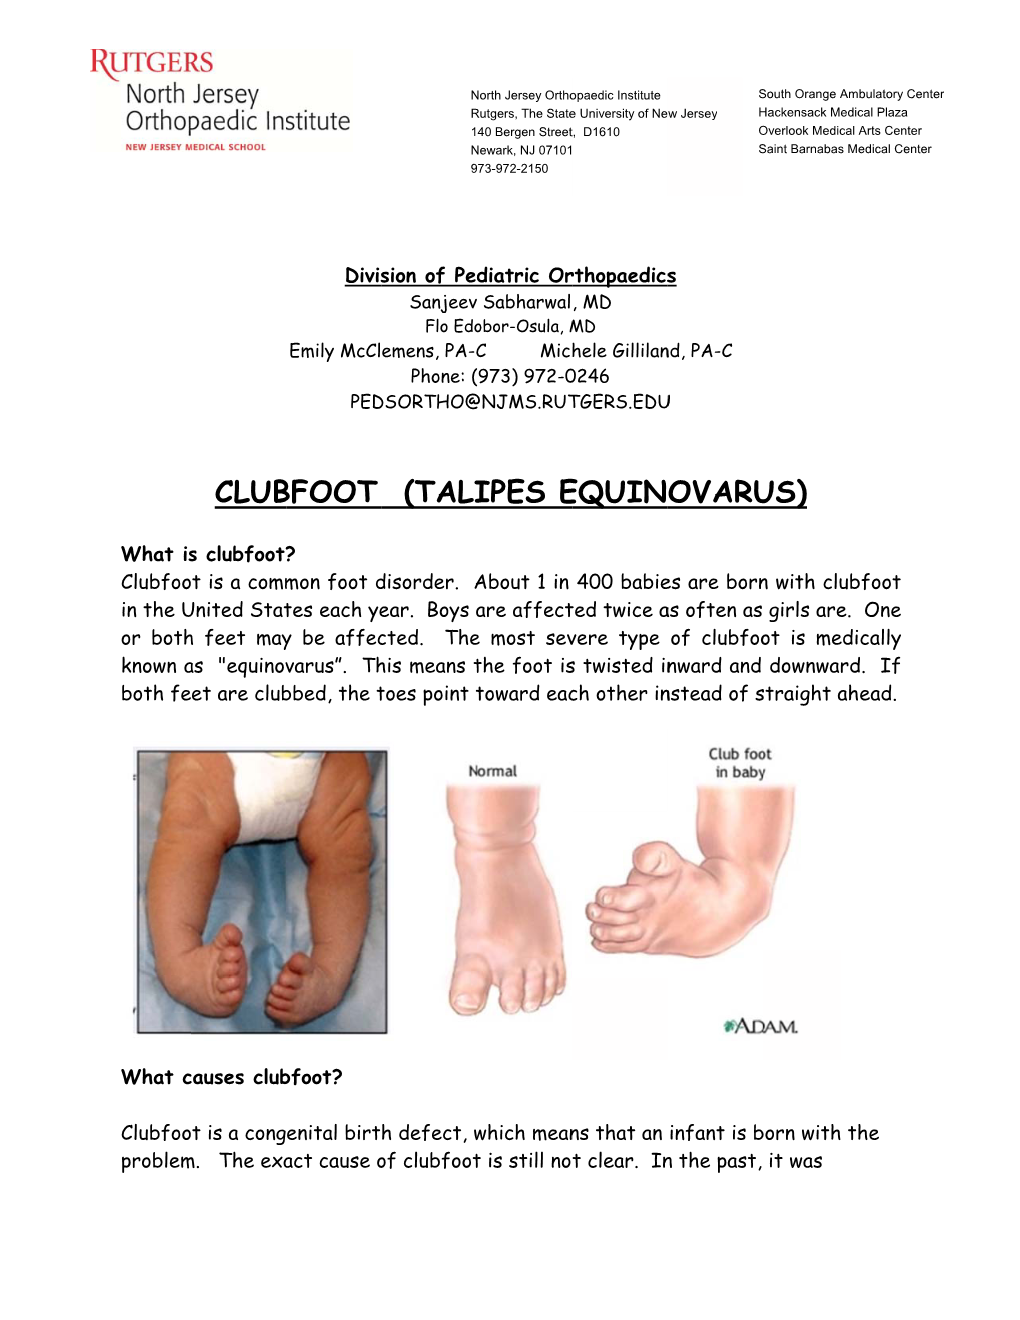 Clubfoot (Talipes Equinovarus)